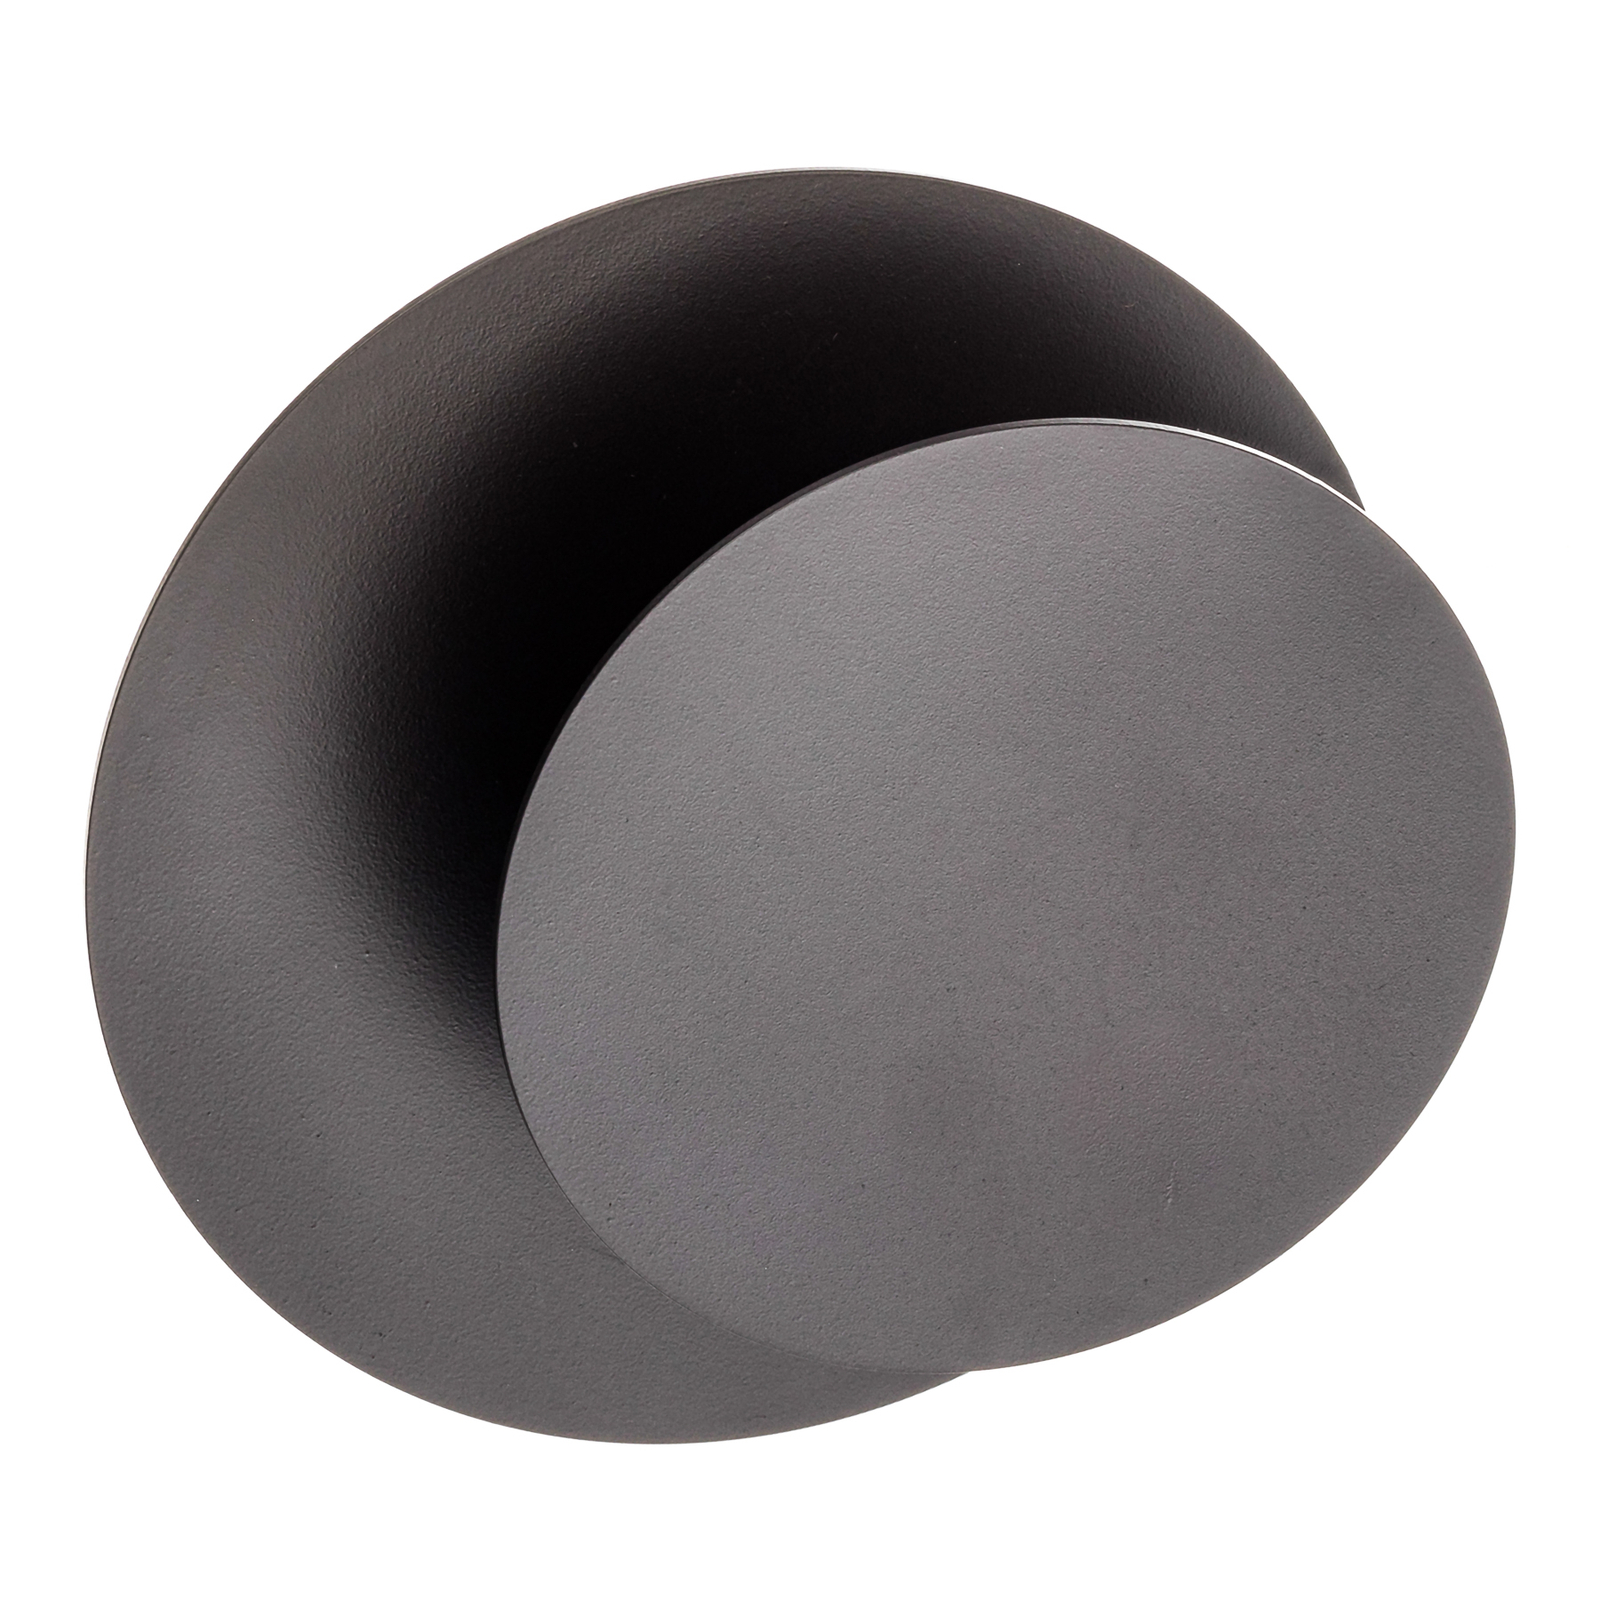 Vegglampe Circle i rund form, svart